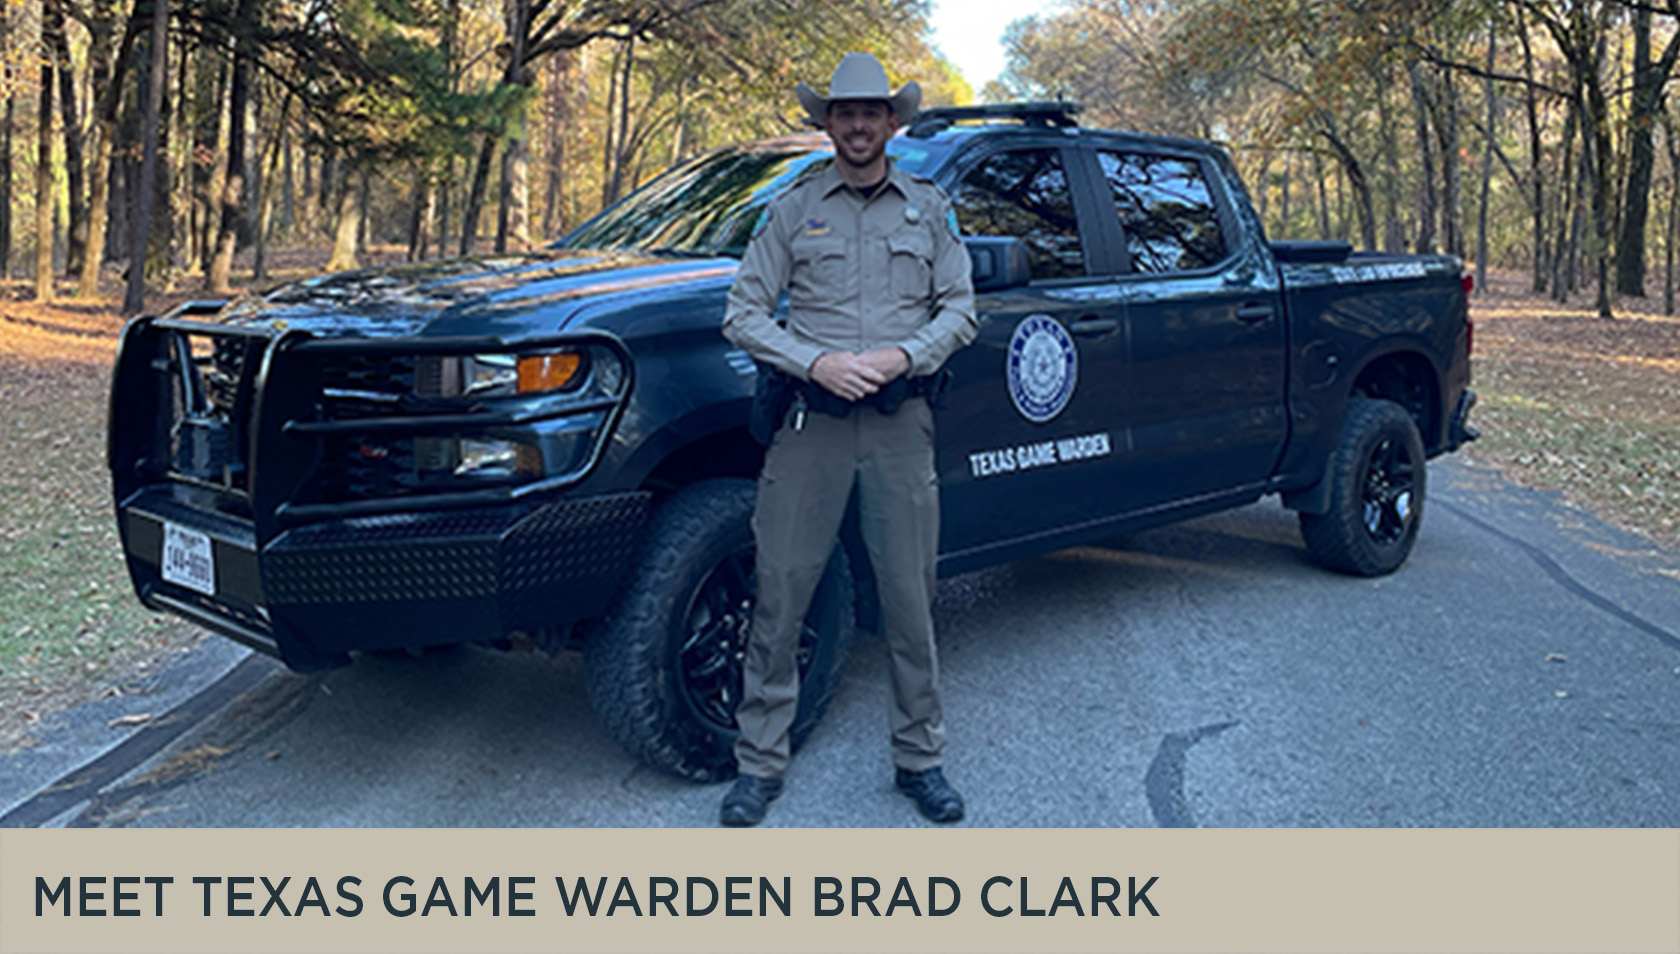 Story #2: Meet Texas Game Warden Brad Clark